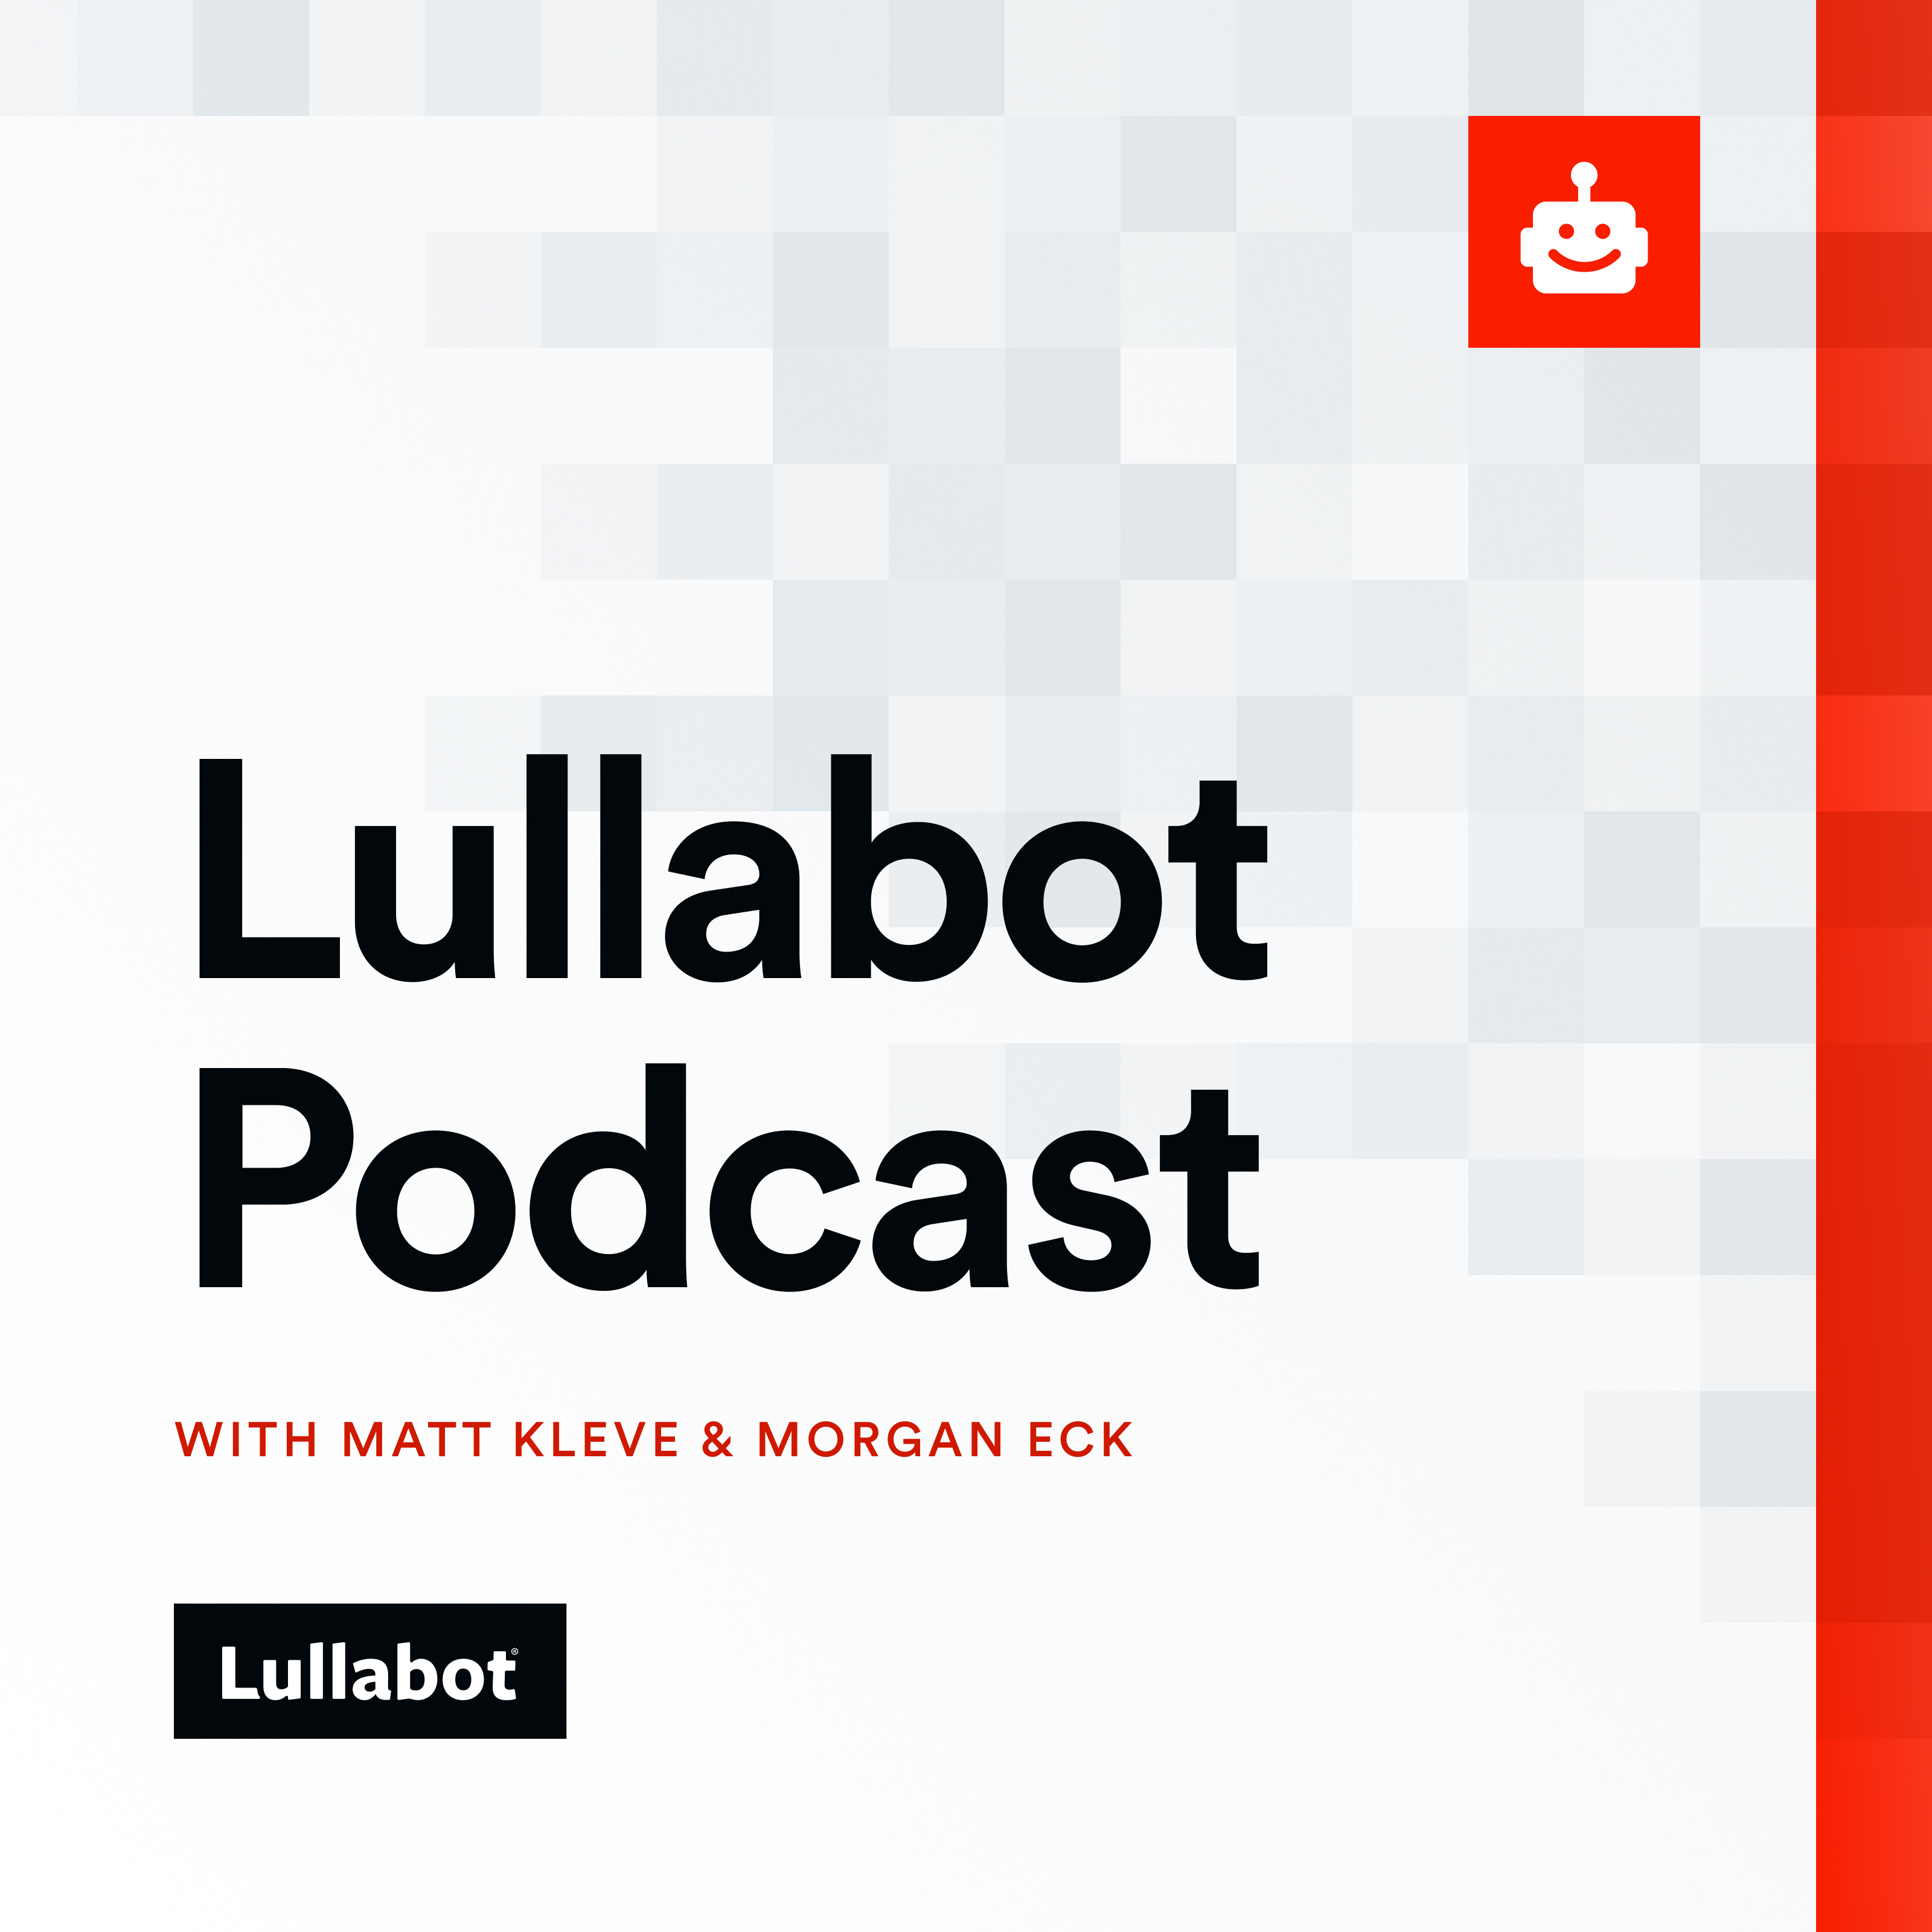 Lullabot Podcast with Matt Kleve and Morgan Eck